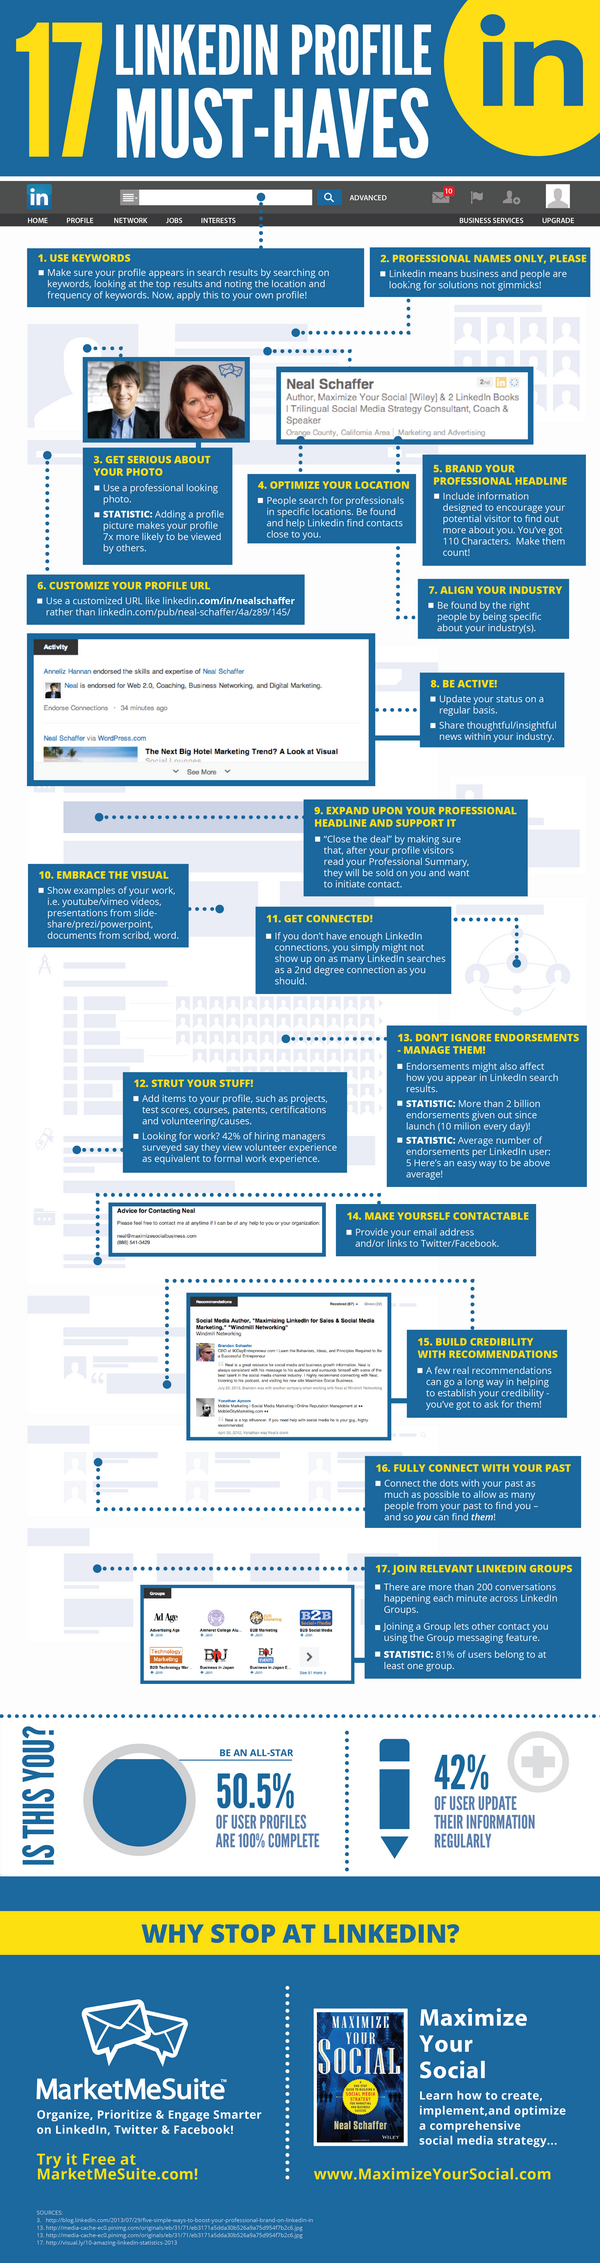 LinkedIn-Perfect-Profile-Tips-Summary-InfographicX600